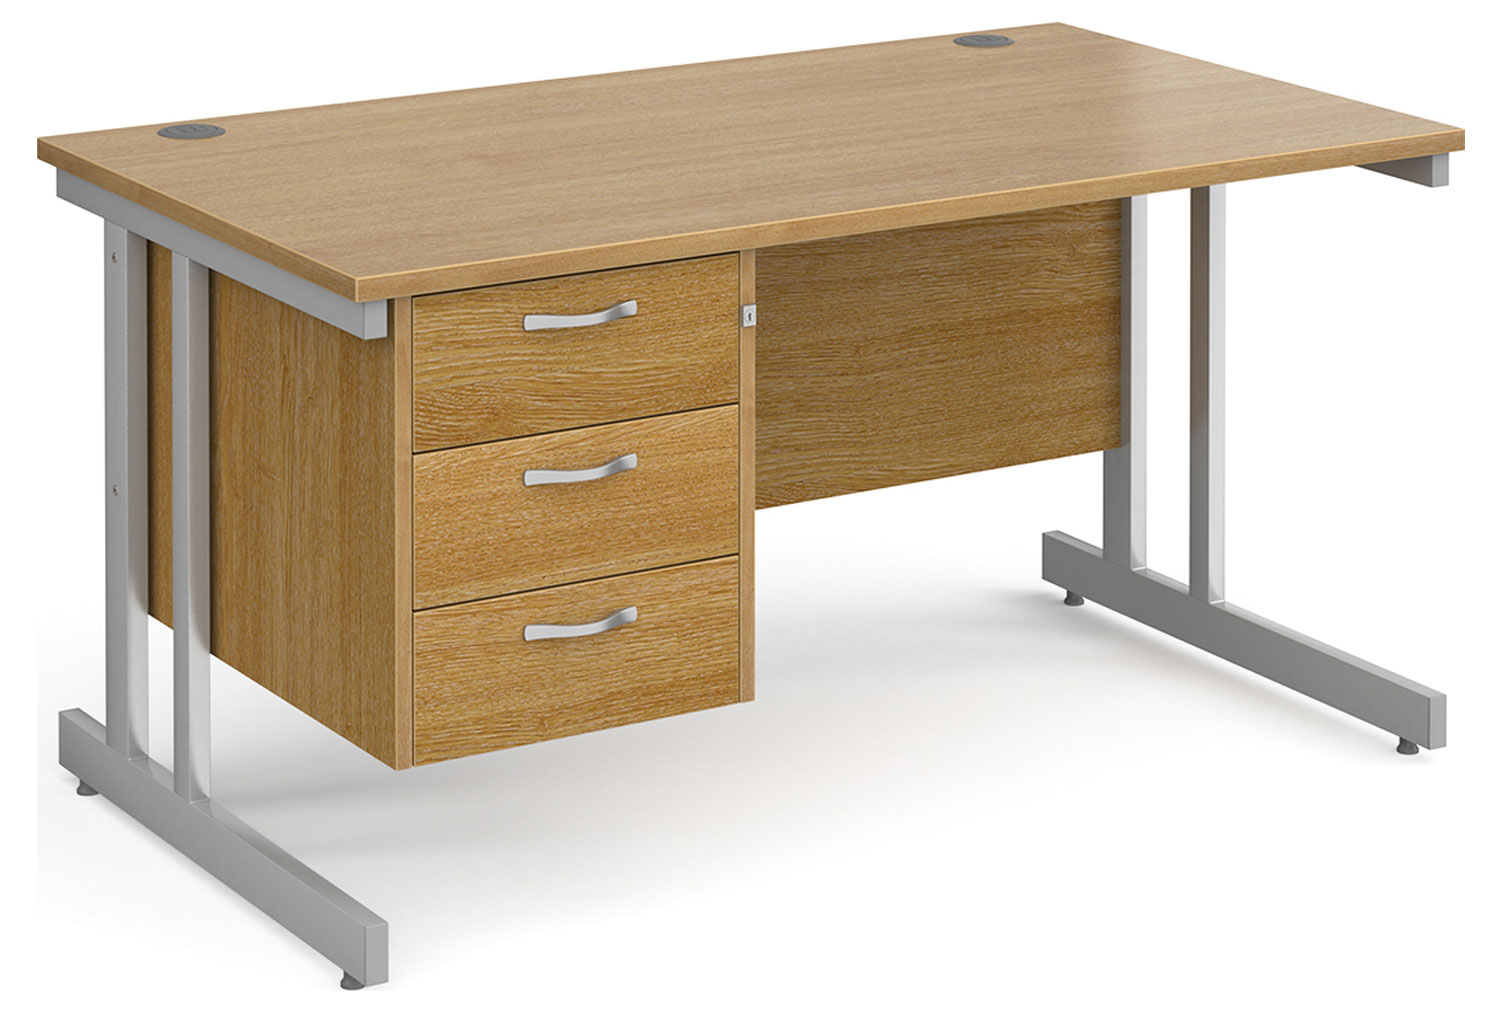 All Oak Double C-Leg Clerical Office Desk 3 Drawer, 140wx80dx73h (cm), Fully Installed